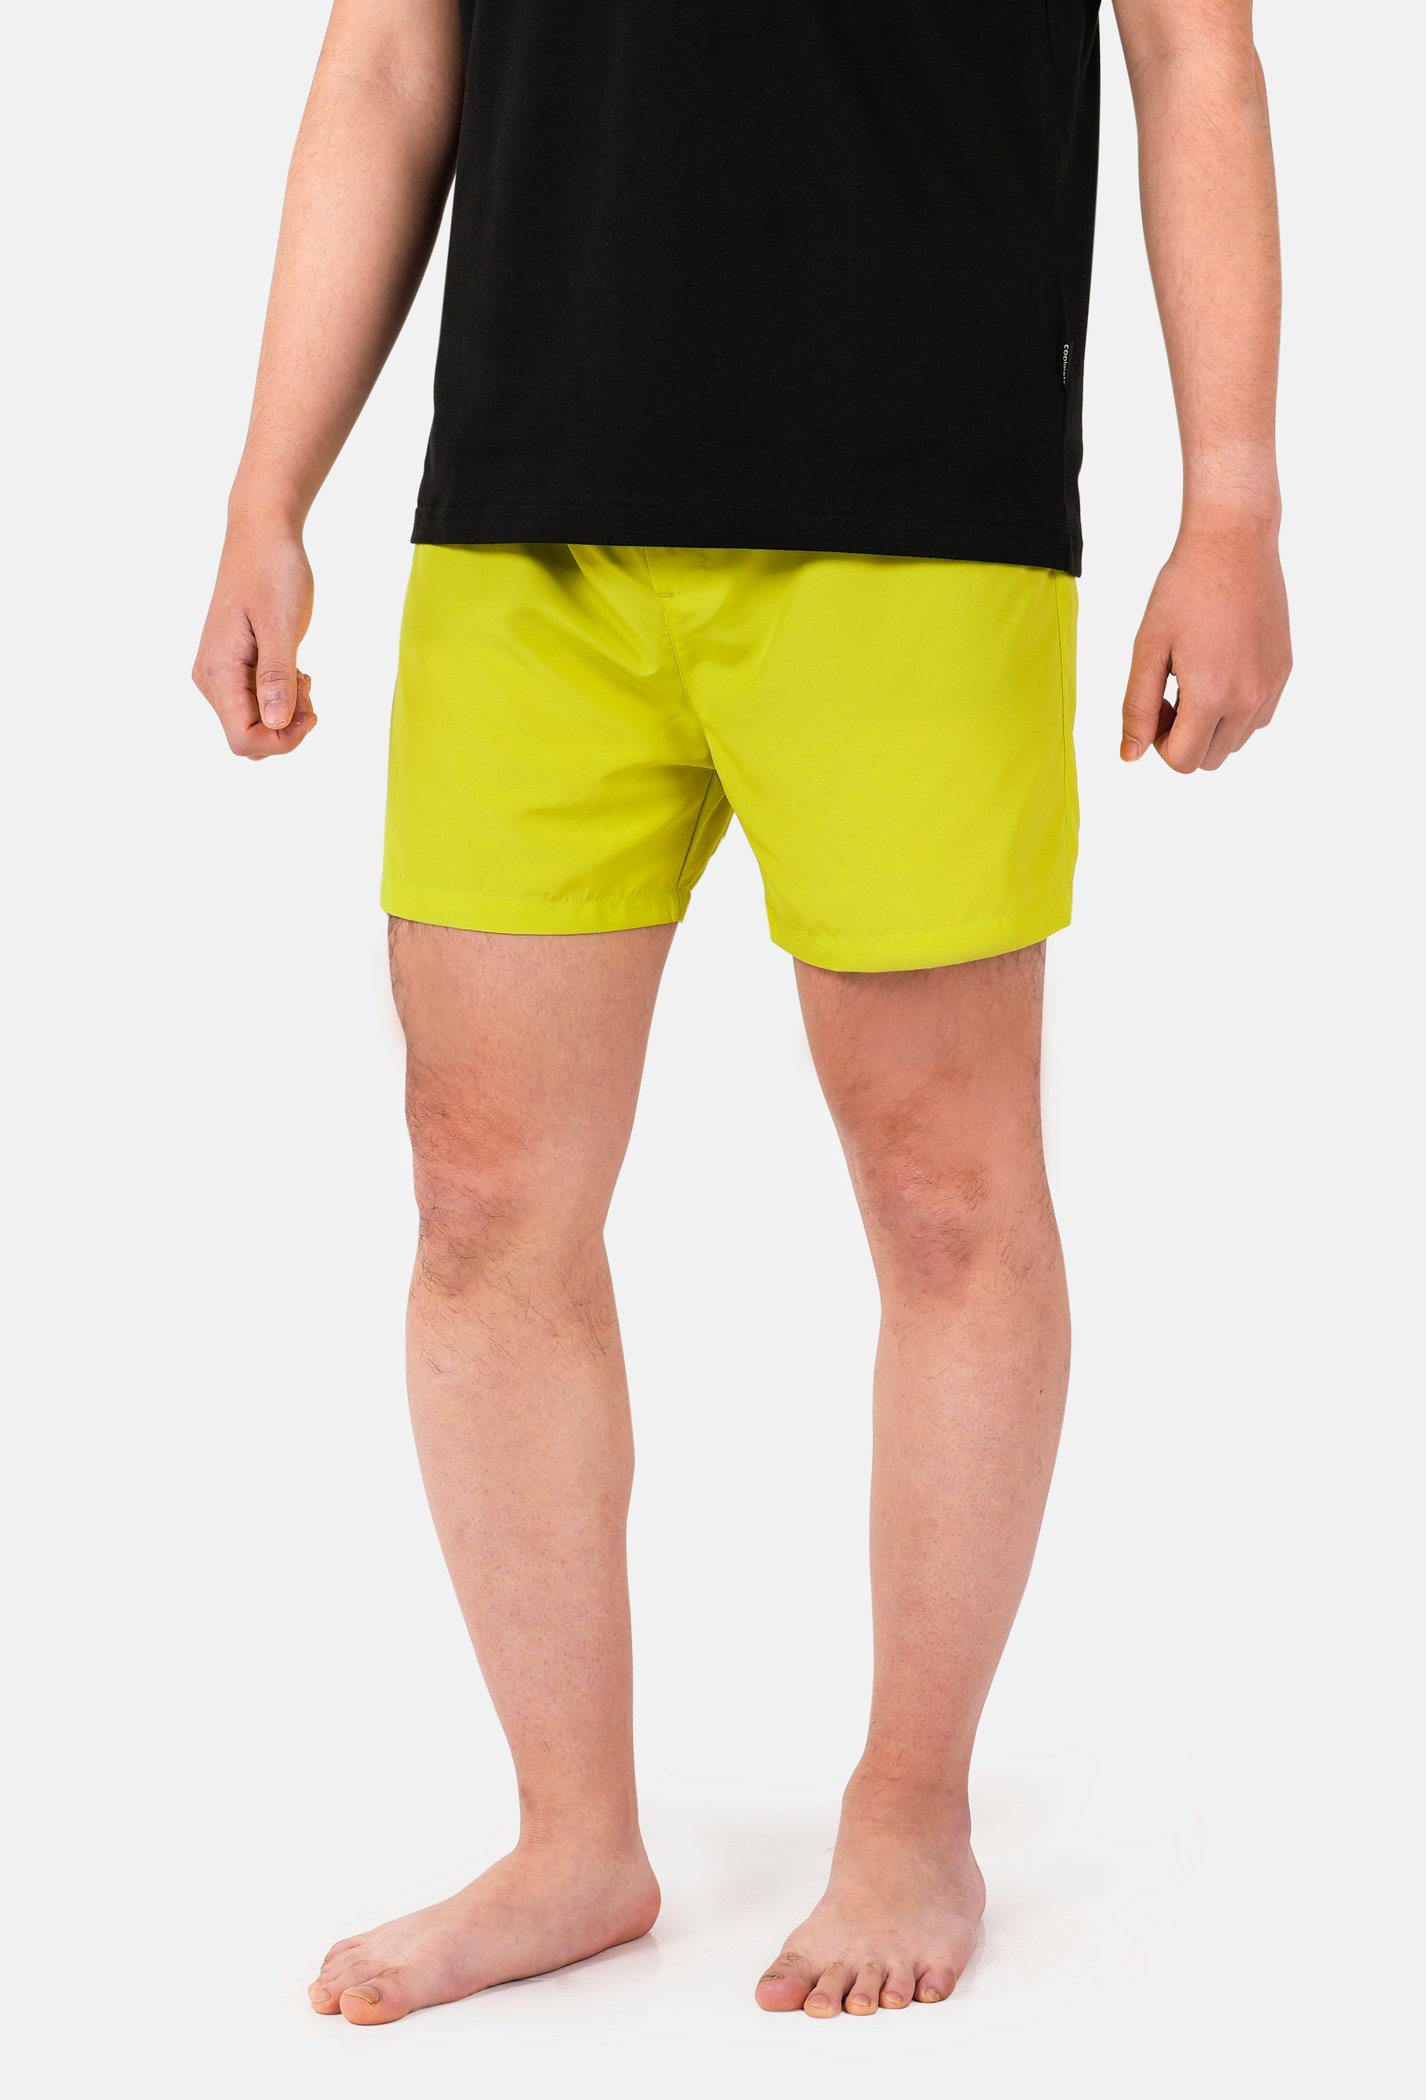 Combo 3 Shorts mặc nhà Basics  3